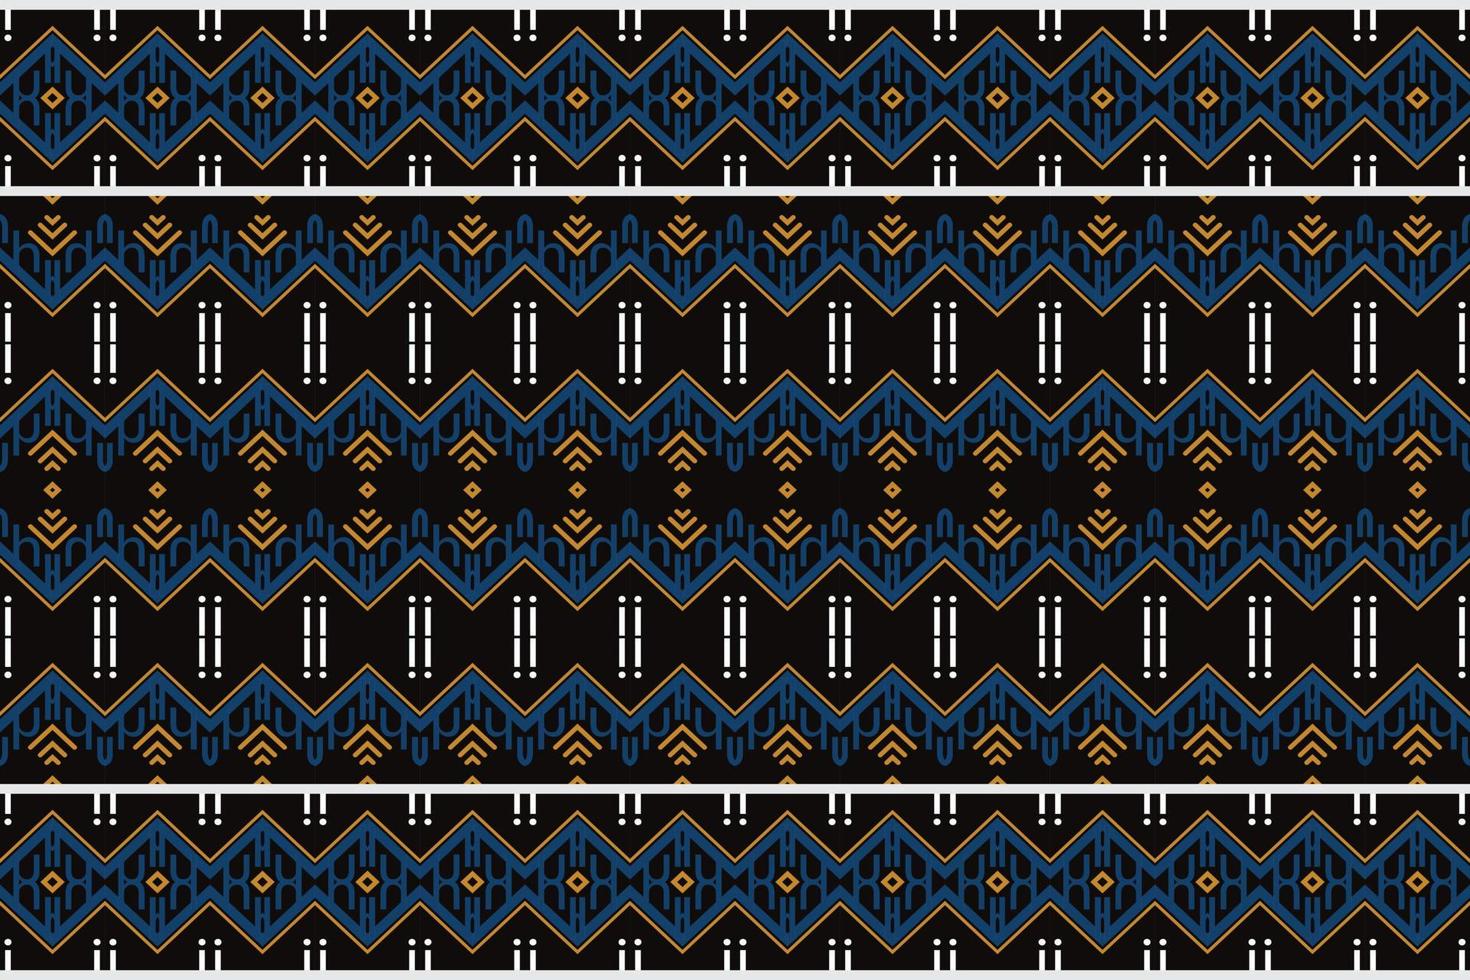 afrikansk etnisk sömlös mönster broderi bakgrund. geometrisk etnisk orientalisk mönster traditionell. etnisk aztec stil abstrakt vektor illustration. design skriva ut textur, tyg, saree, sari, matta.